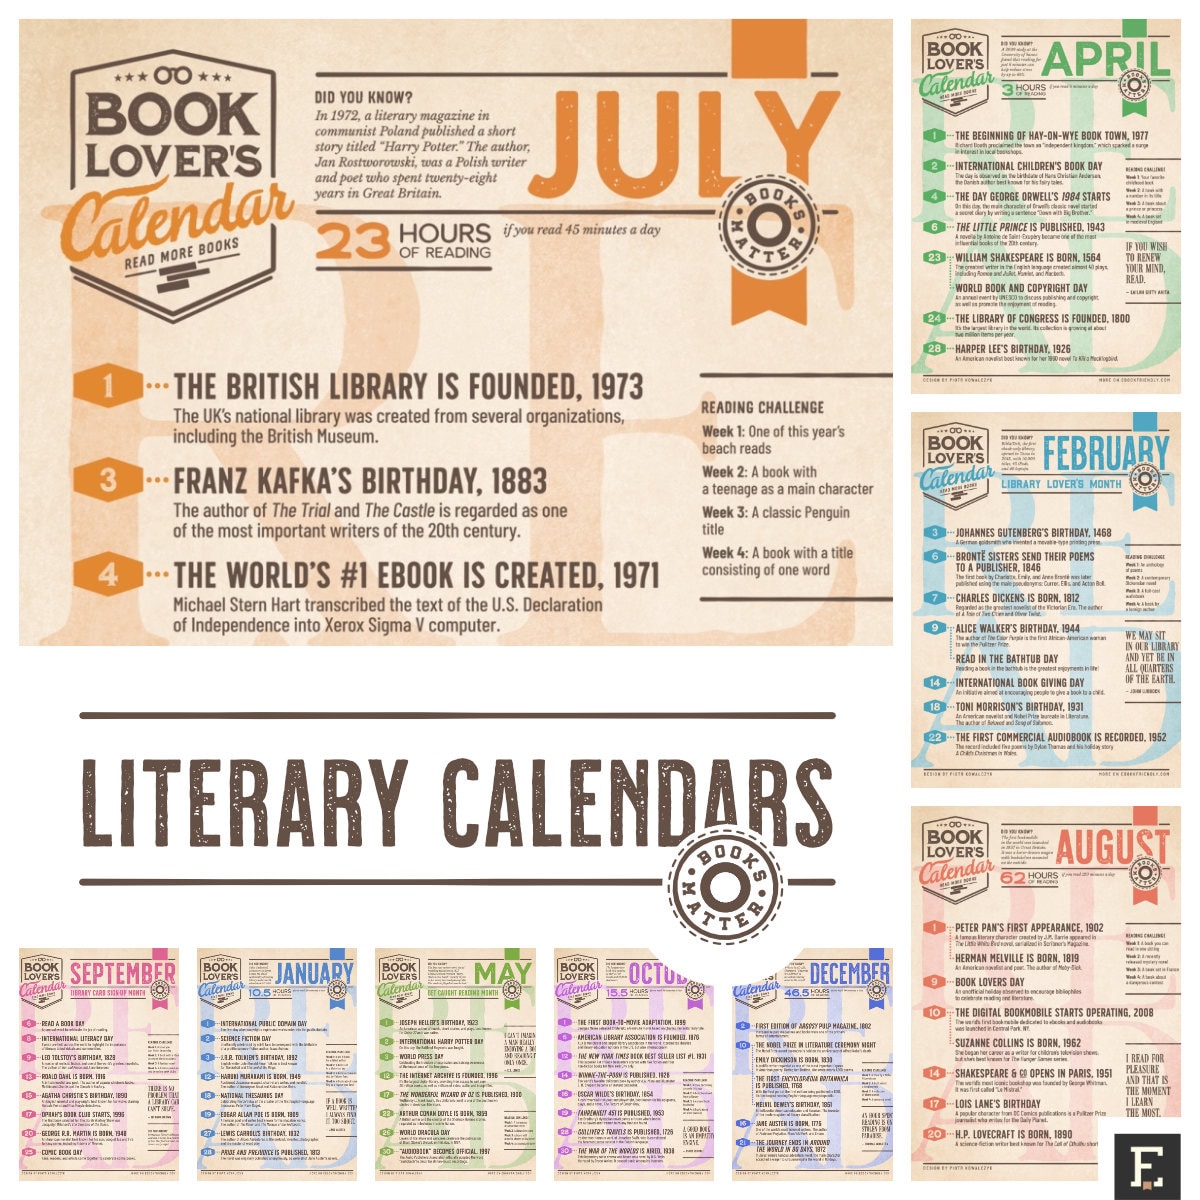 Ultimate literary calendar